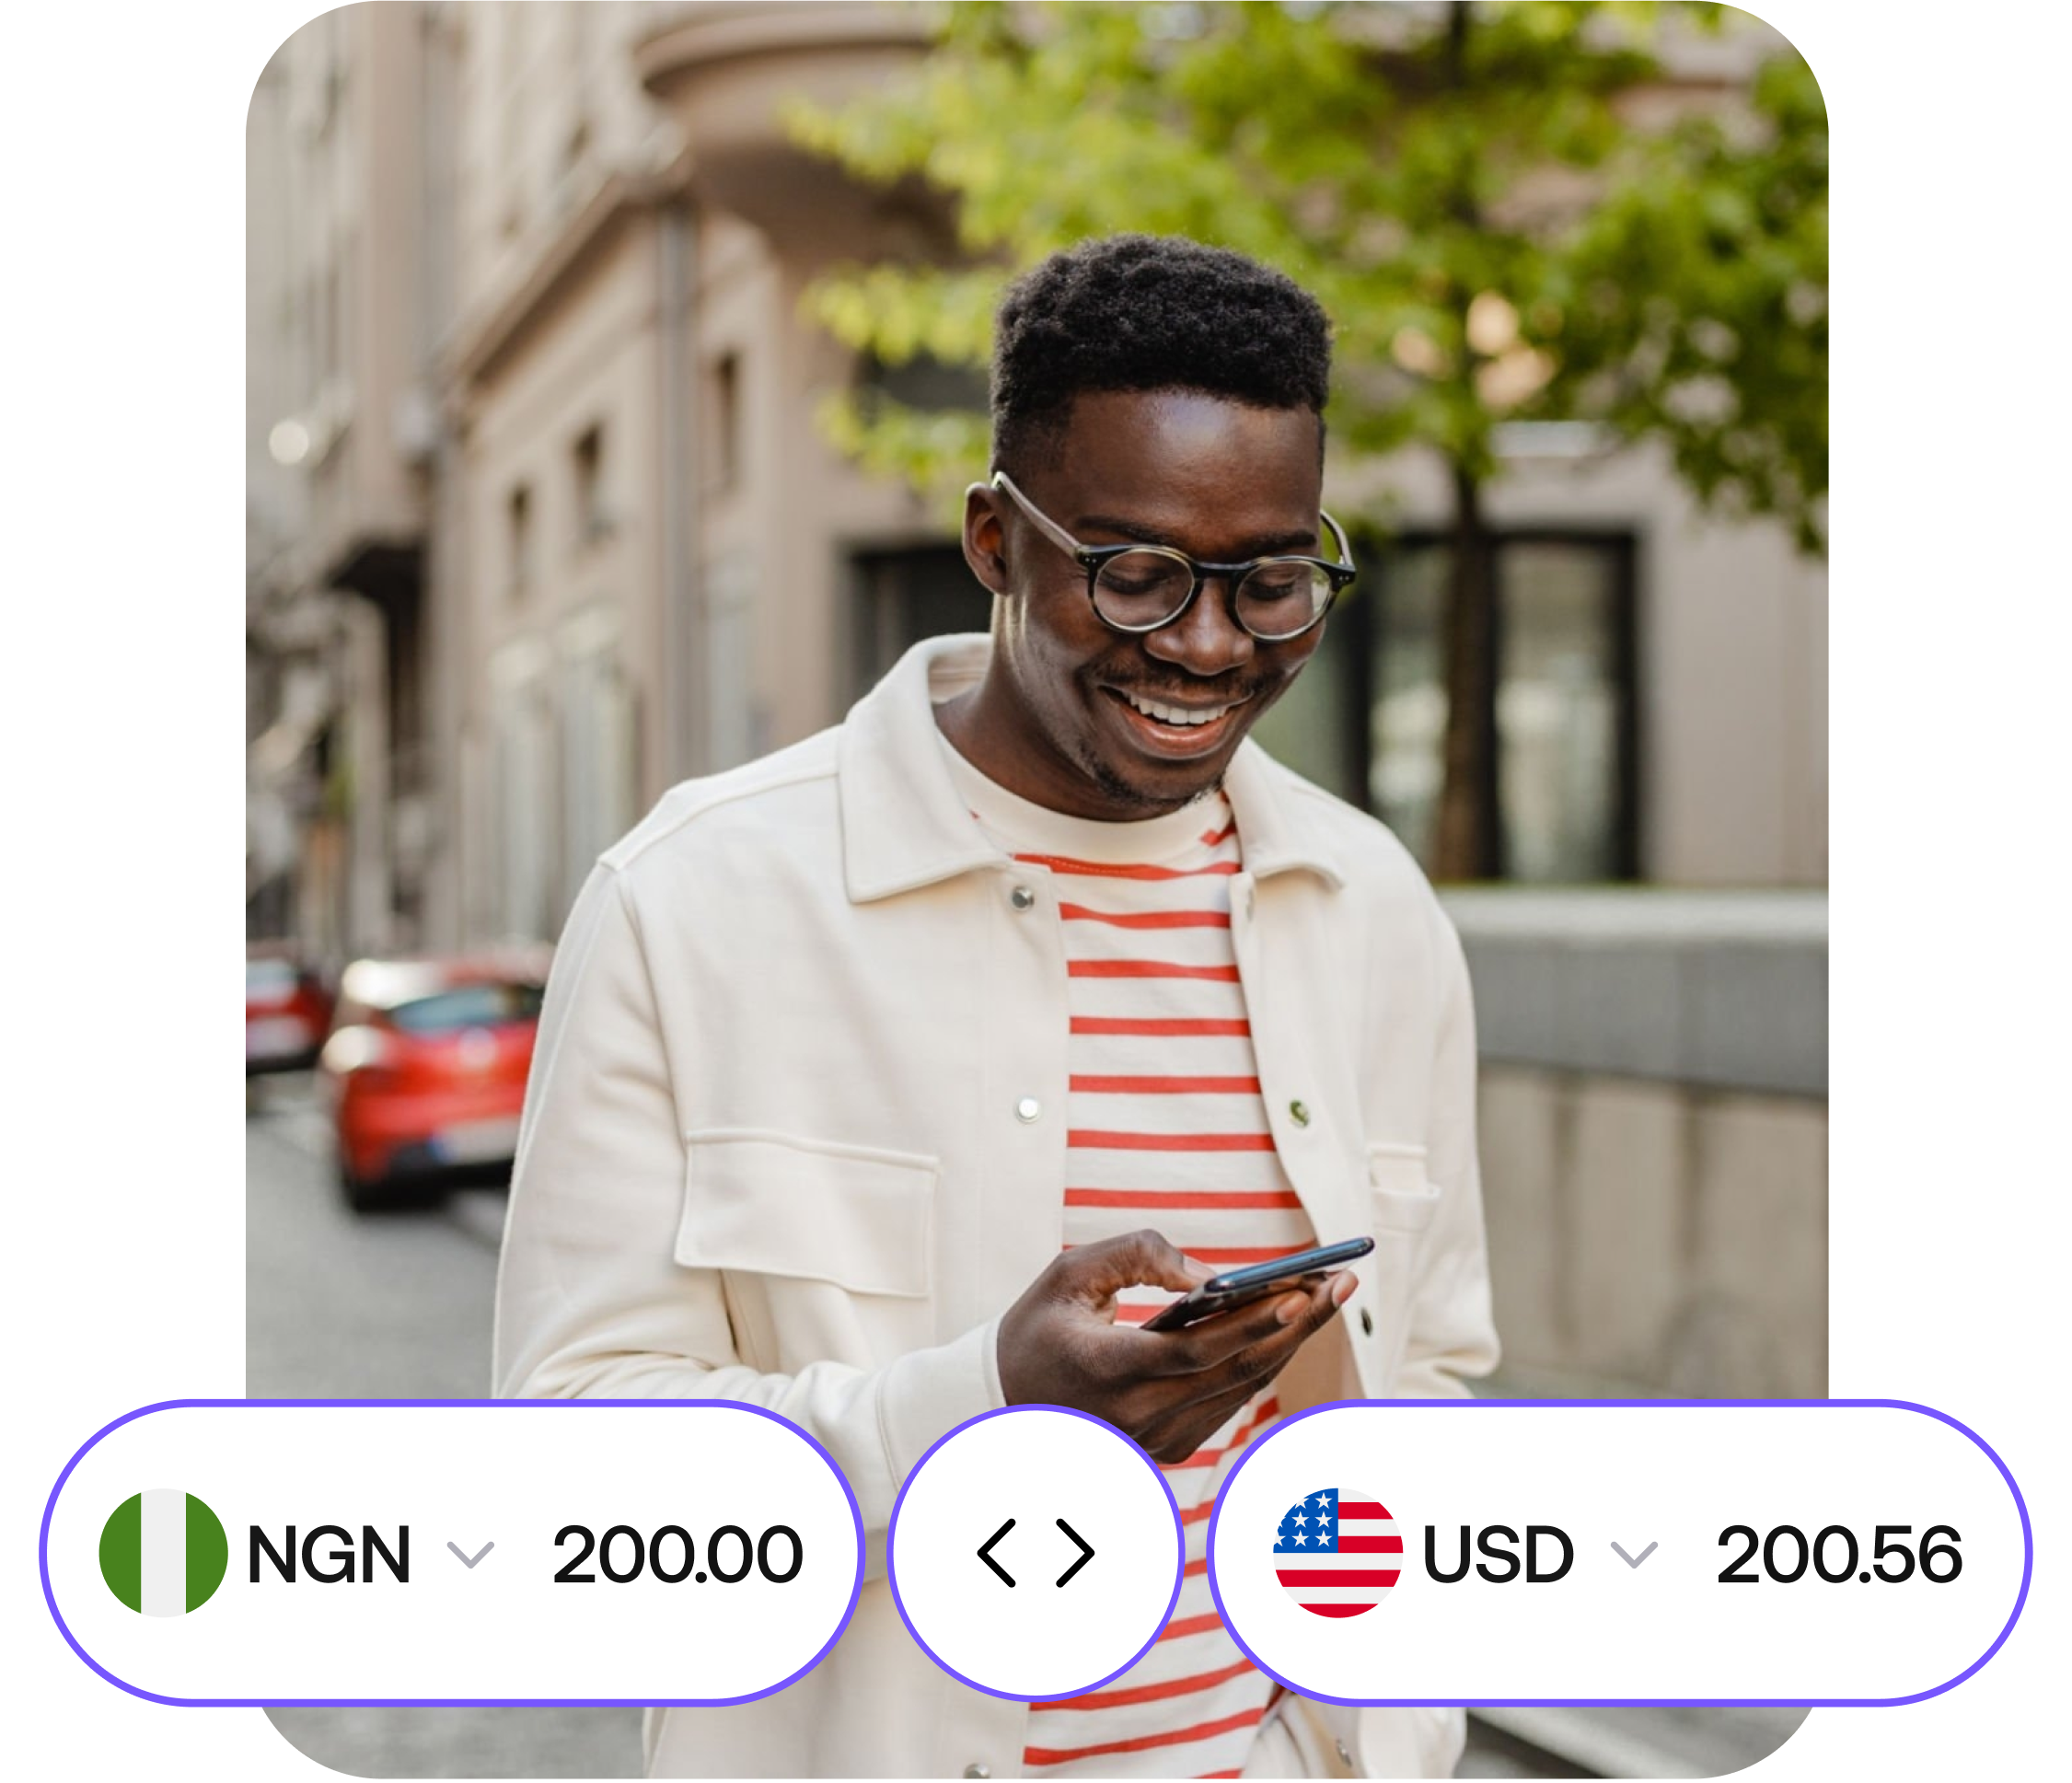 Send money to any Nigerian bank domiciliary account